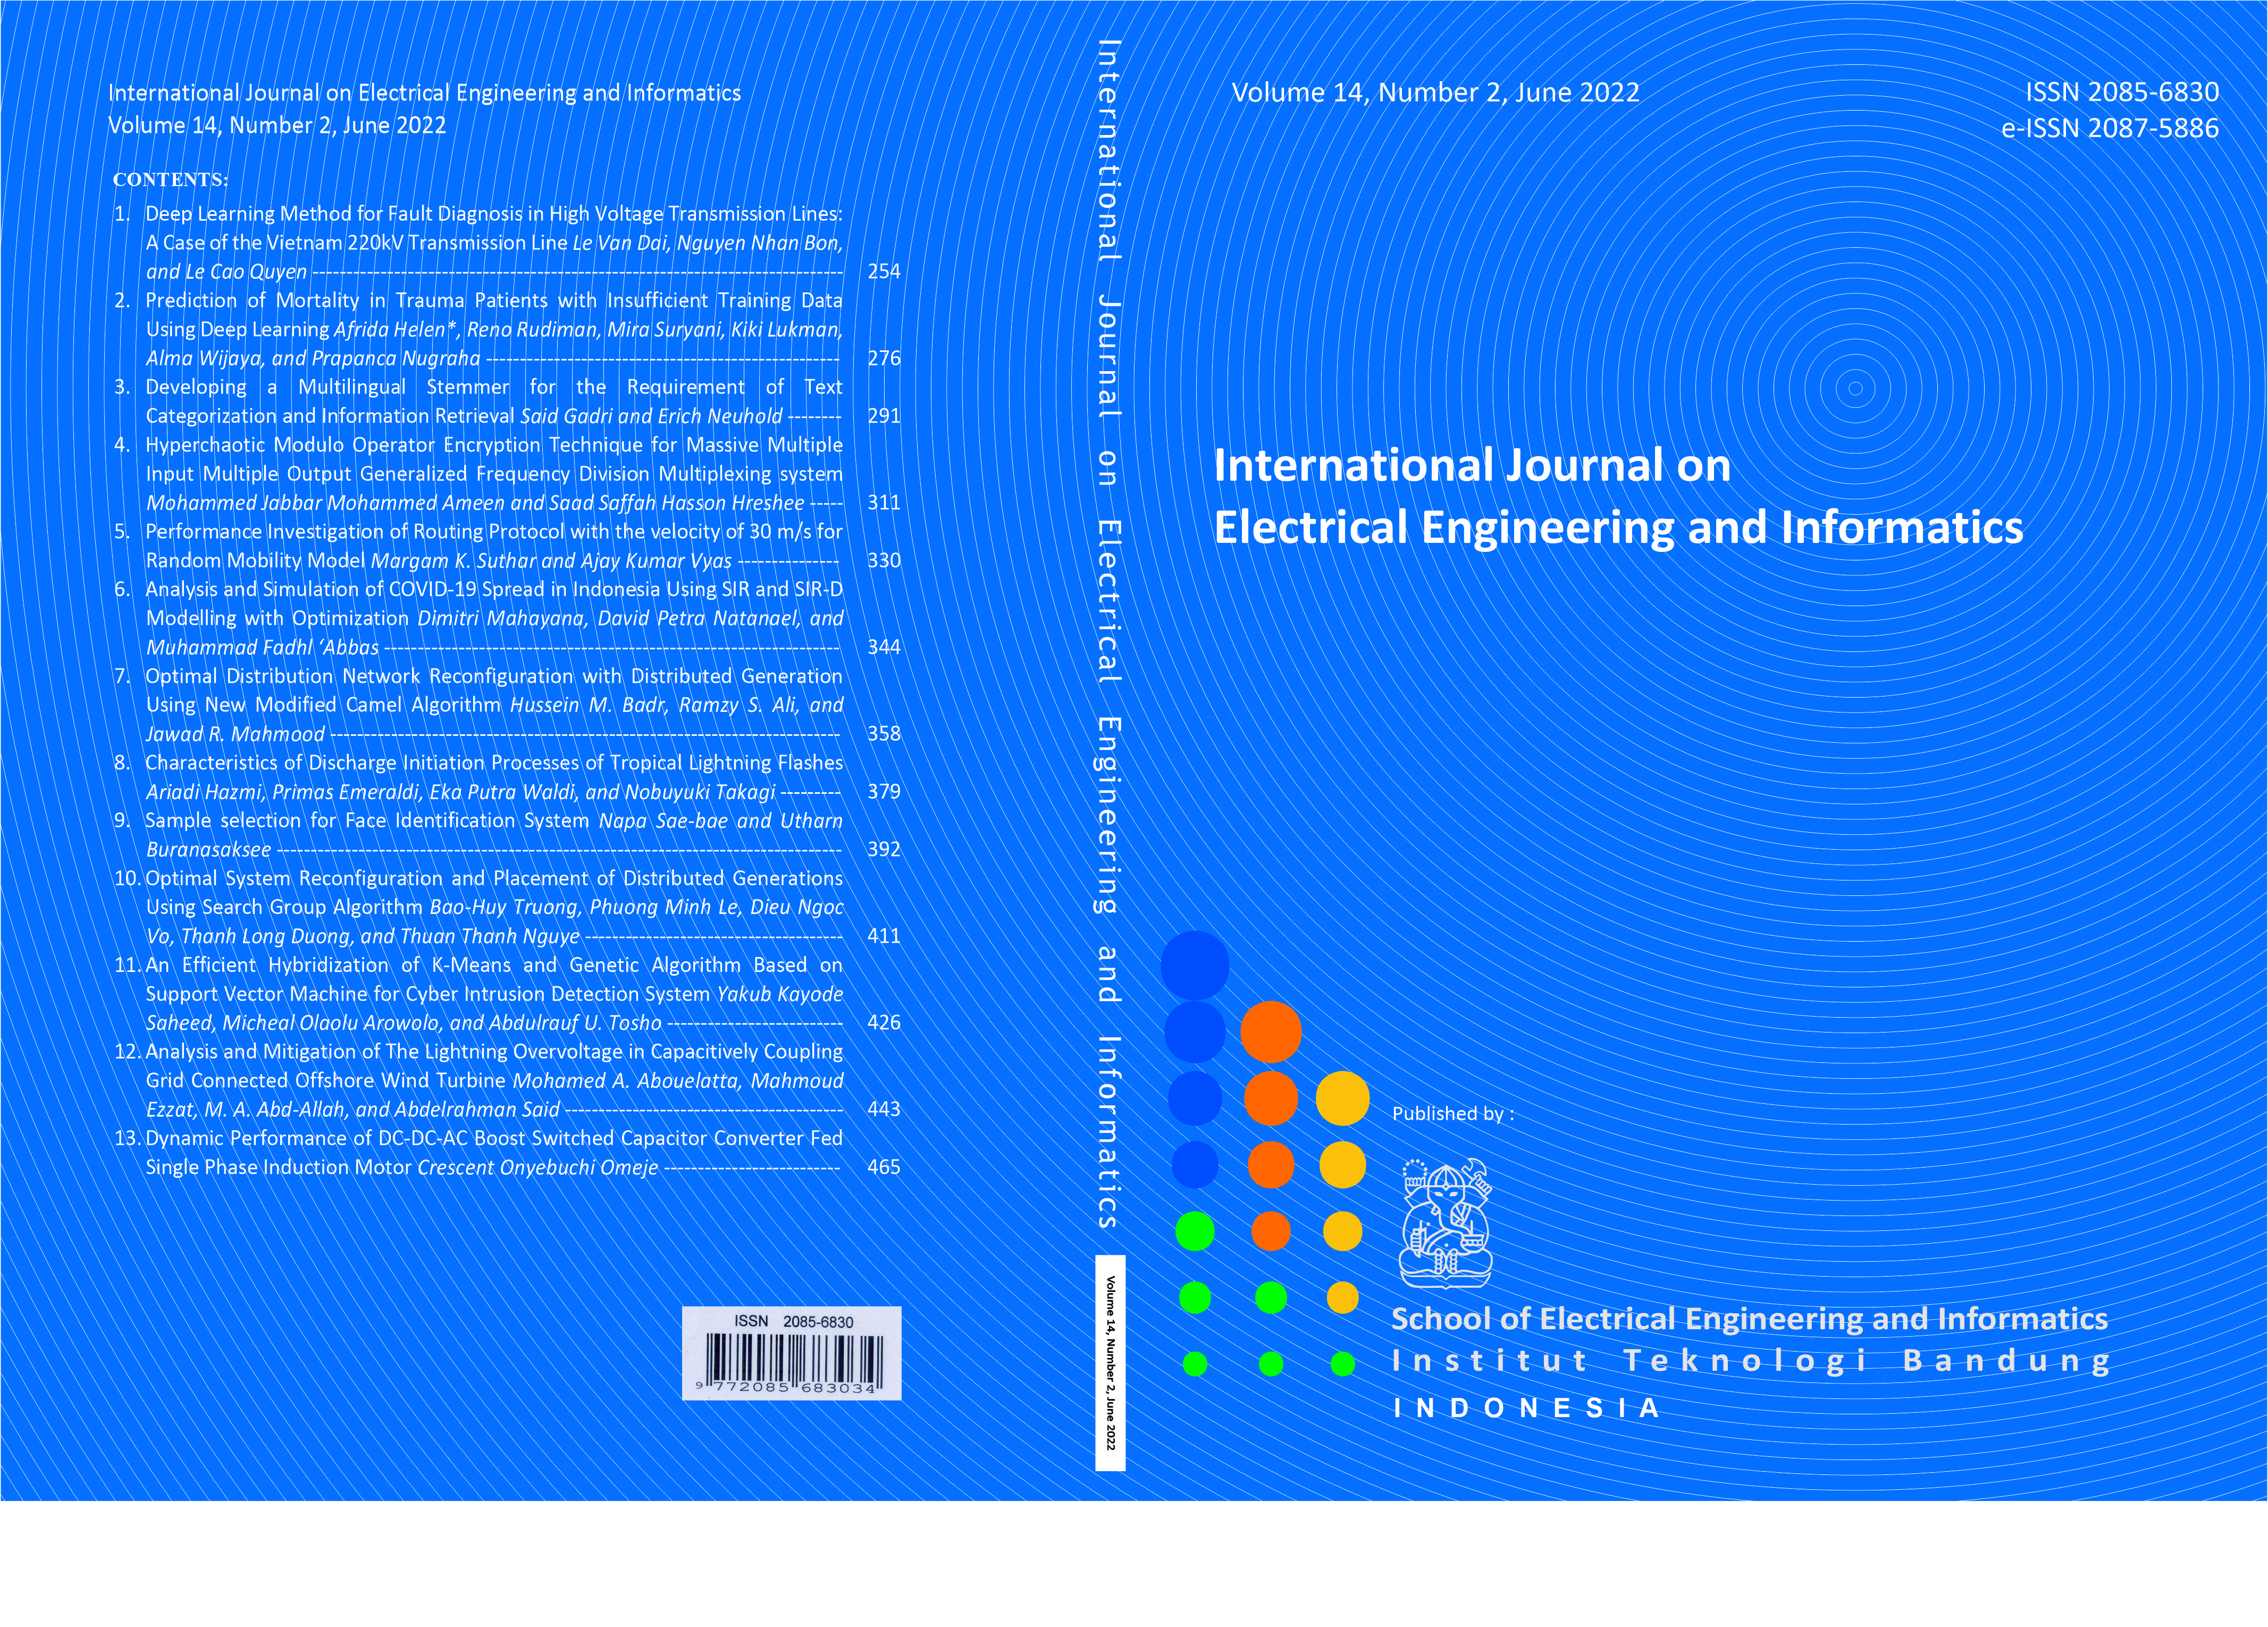 Journal cover Vol. 14 No. 2 June 2022